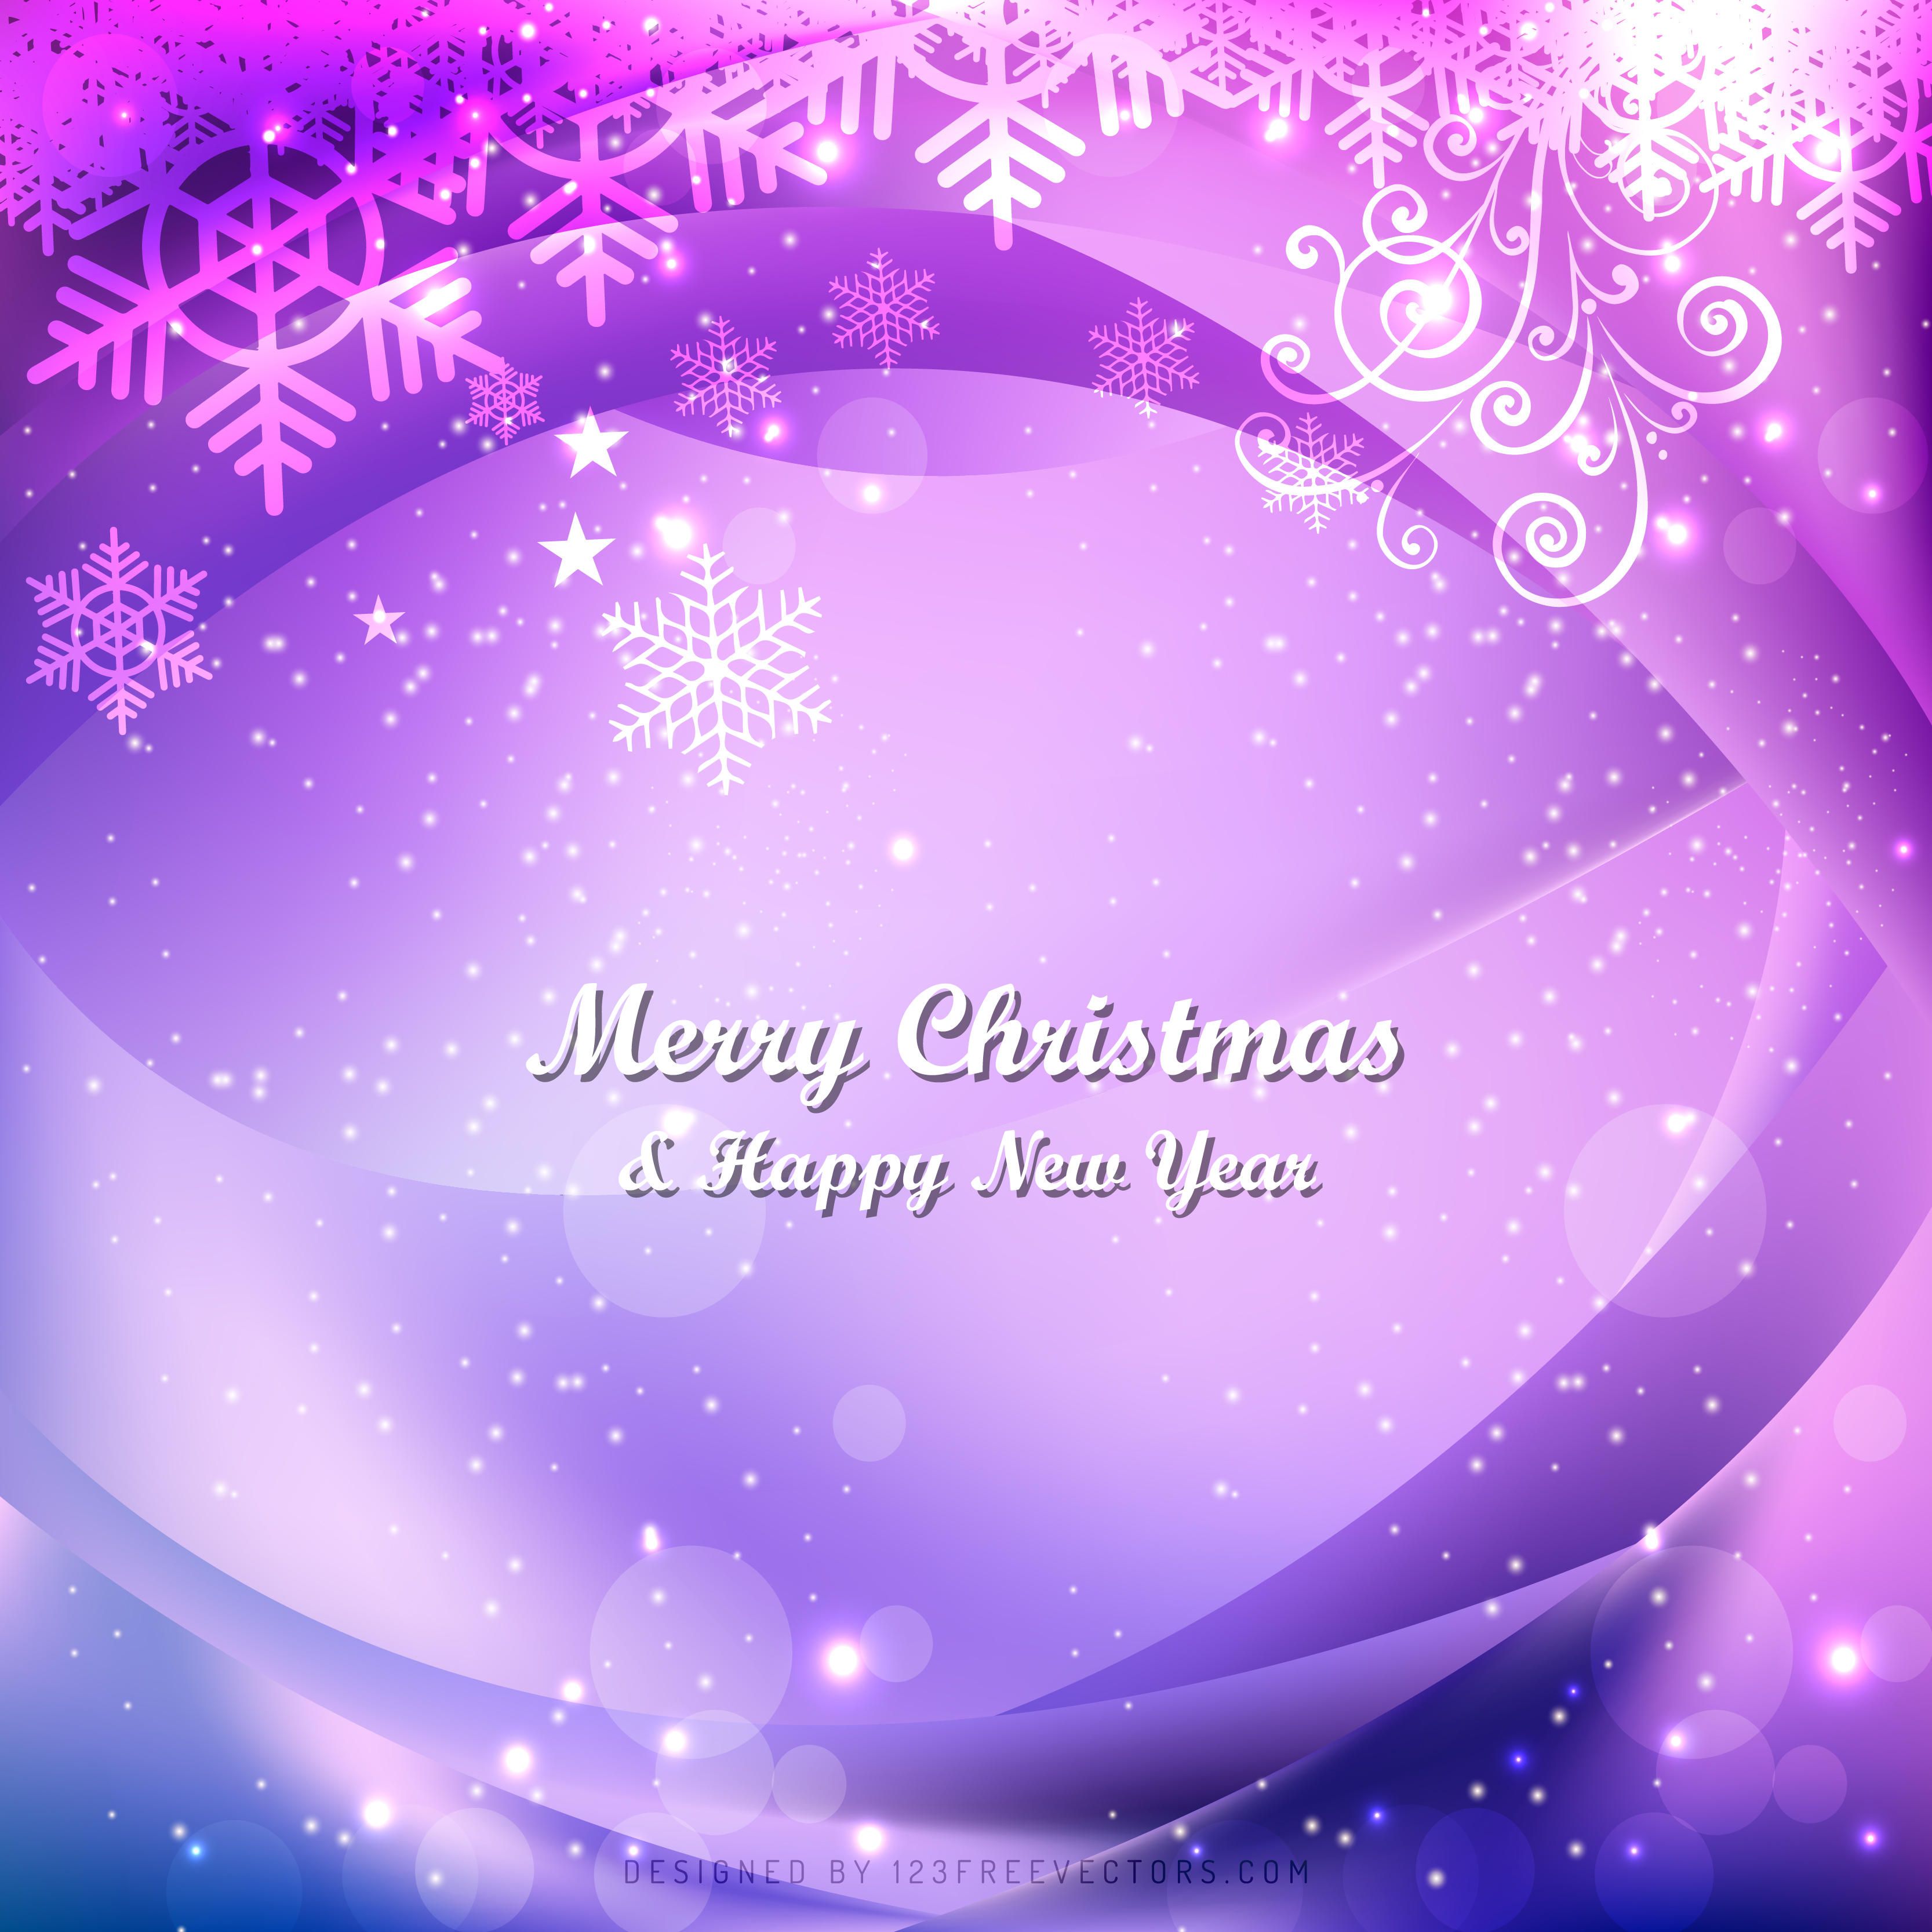 Merry Christmas Blue Purple Background Image